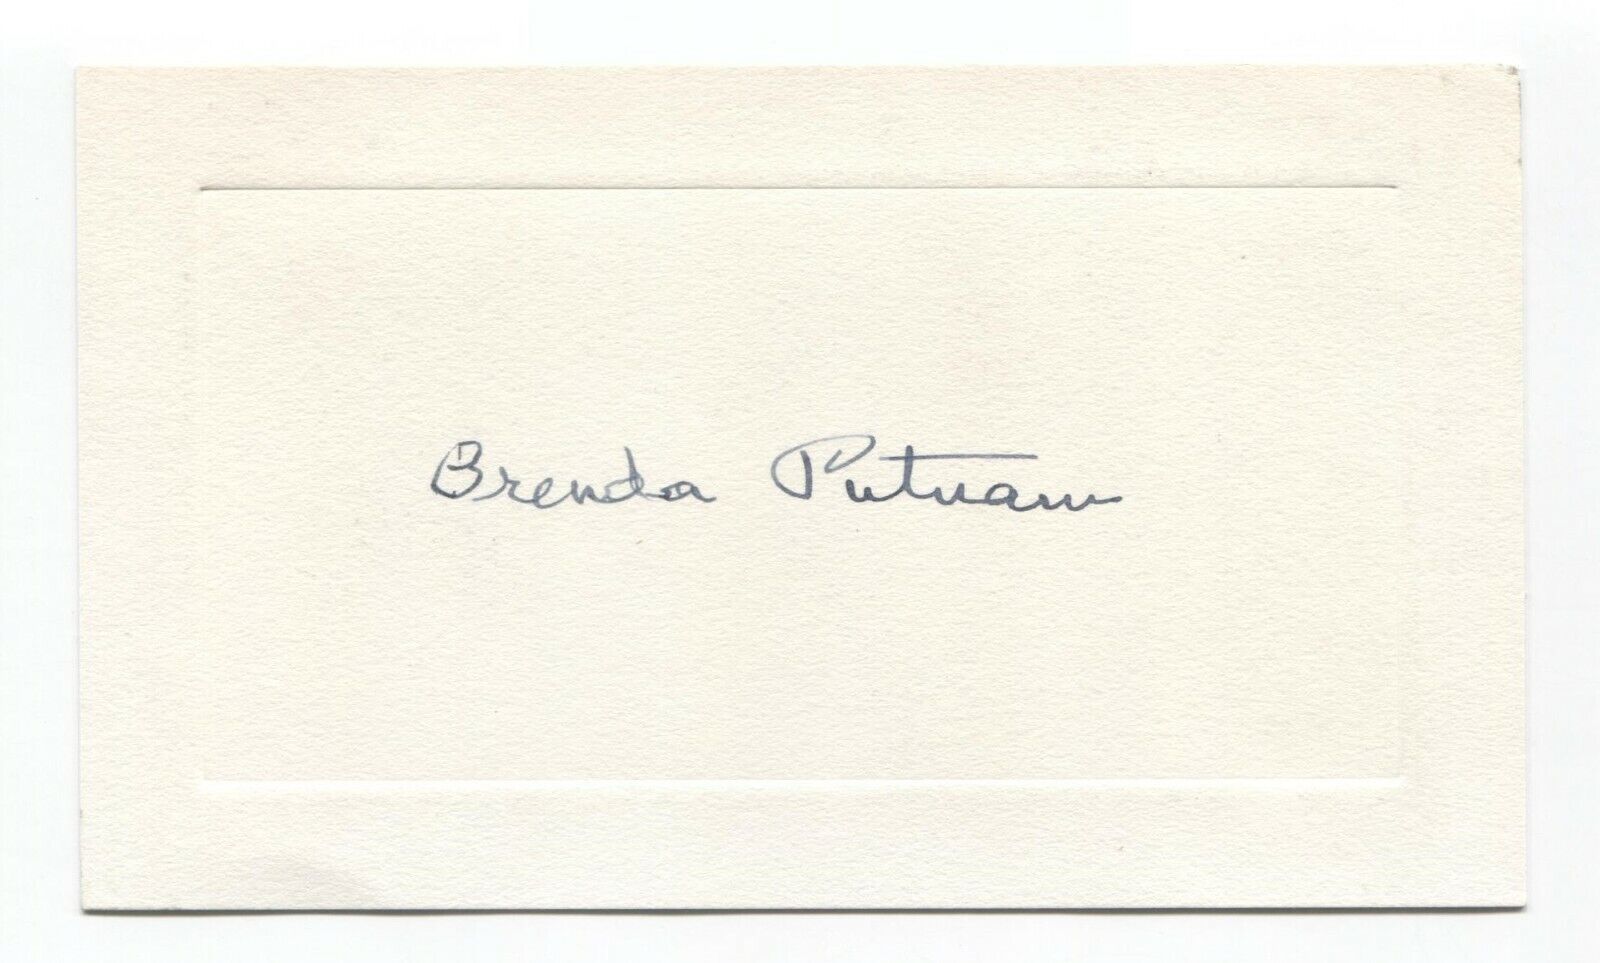 Brenda Putnam Signed Card Autographed Signature Artist Sculptor